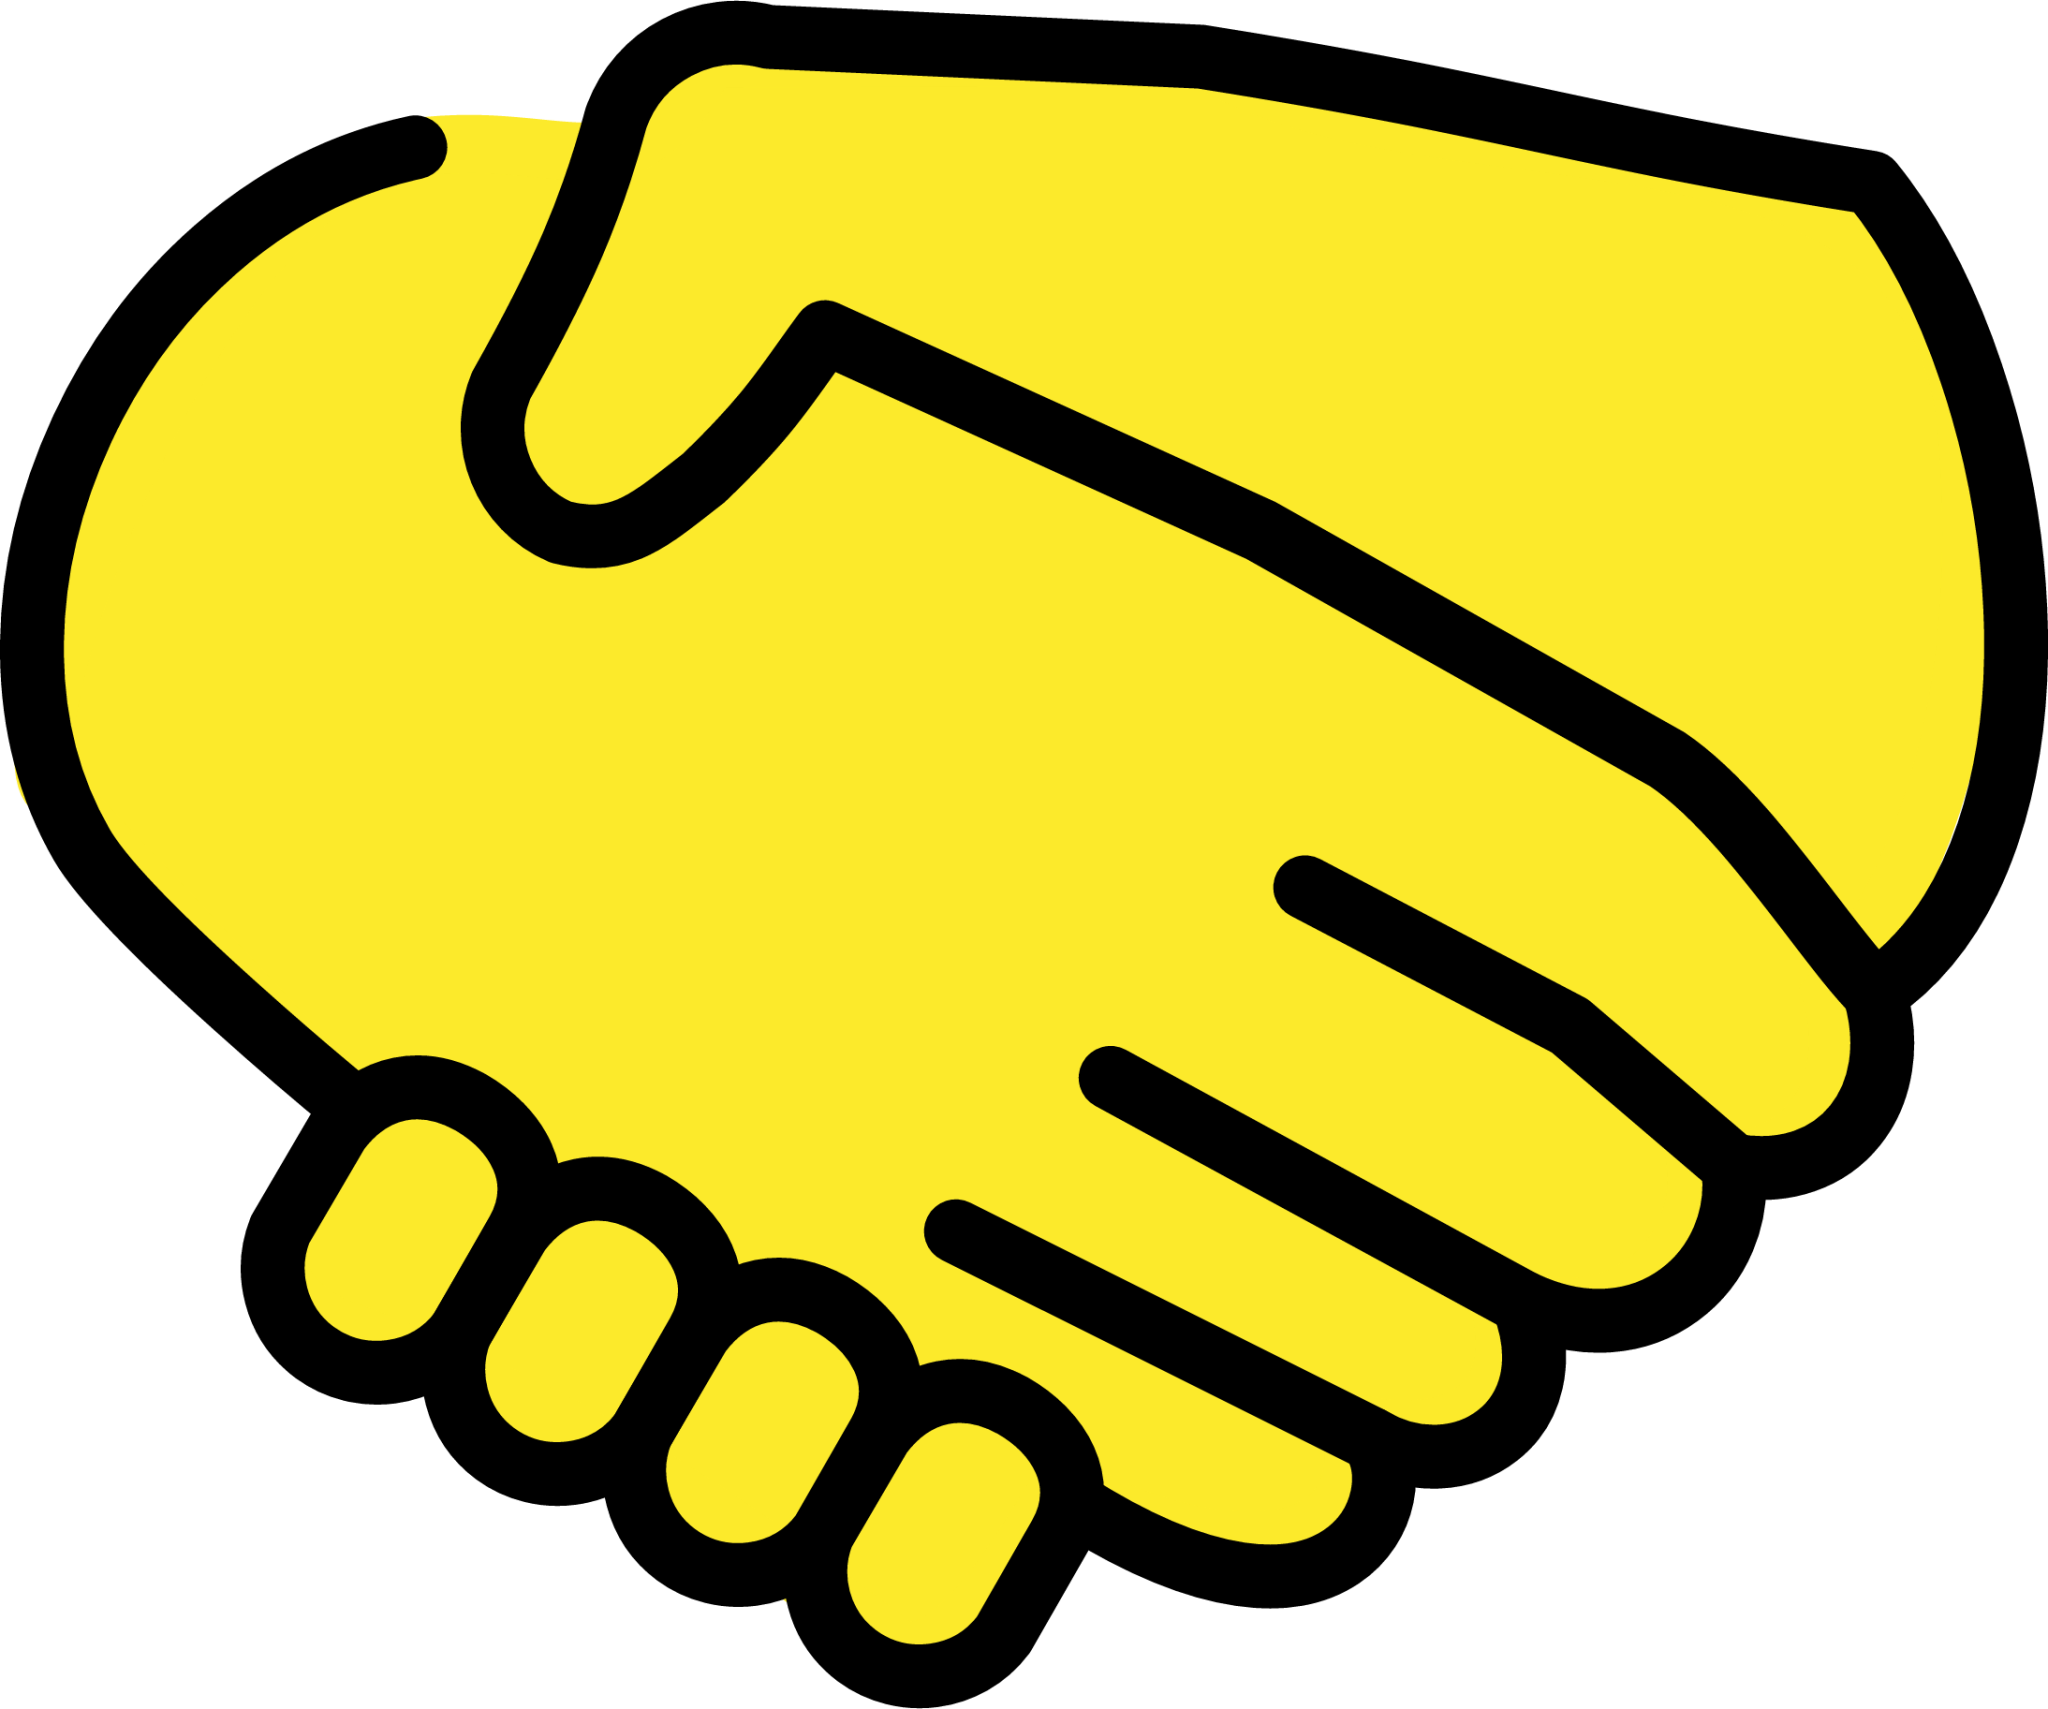 Emoji: The Handshake - Finland Toolbox